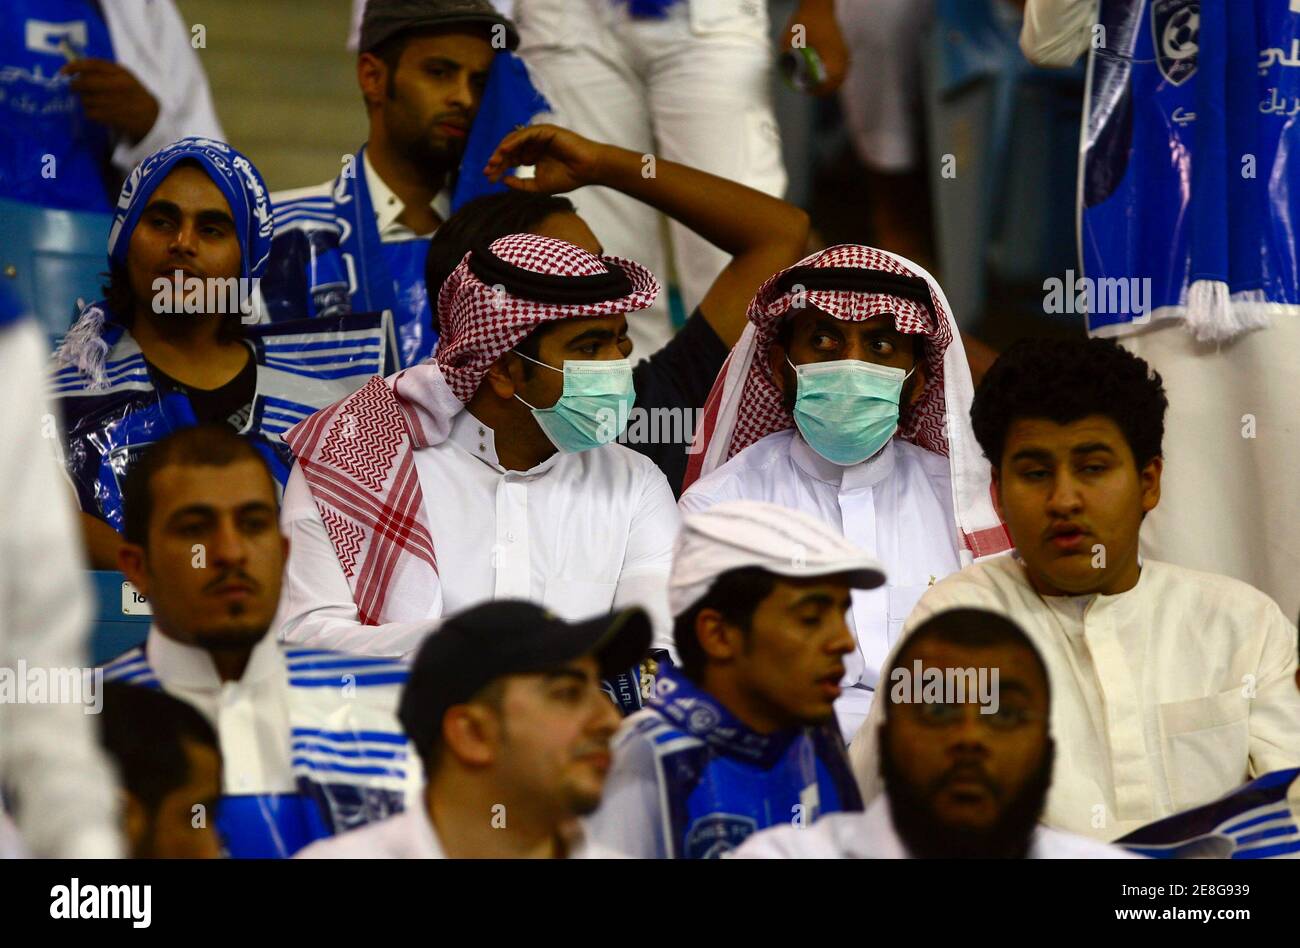 Al Hilal's fans wearing face masks watch their team during their Saudi Super League qualifying soccer match against Al Nasr in Riyadh September 29, 2009. REUTERS/Fahad Shadeed     (SAUDI ARABIA SPORT SOCCER HEALTH) Stock Photo